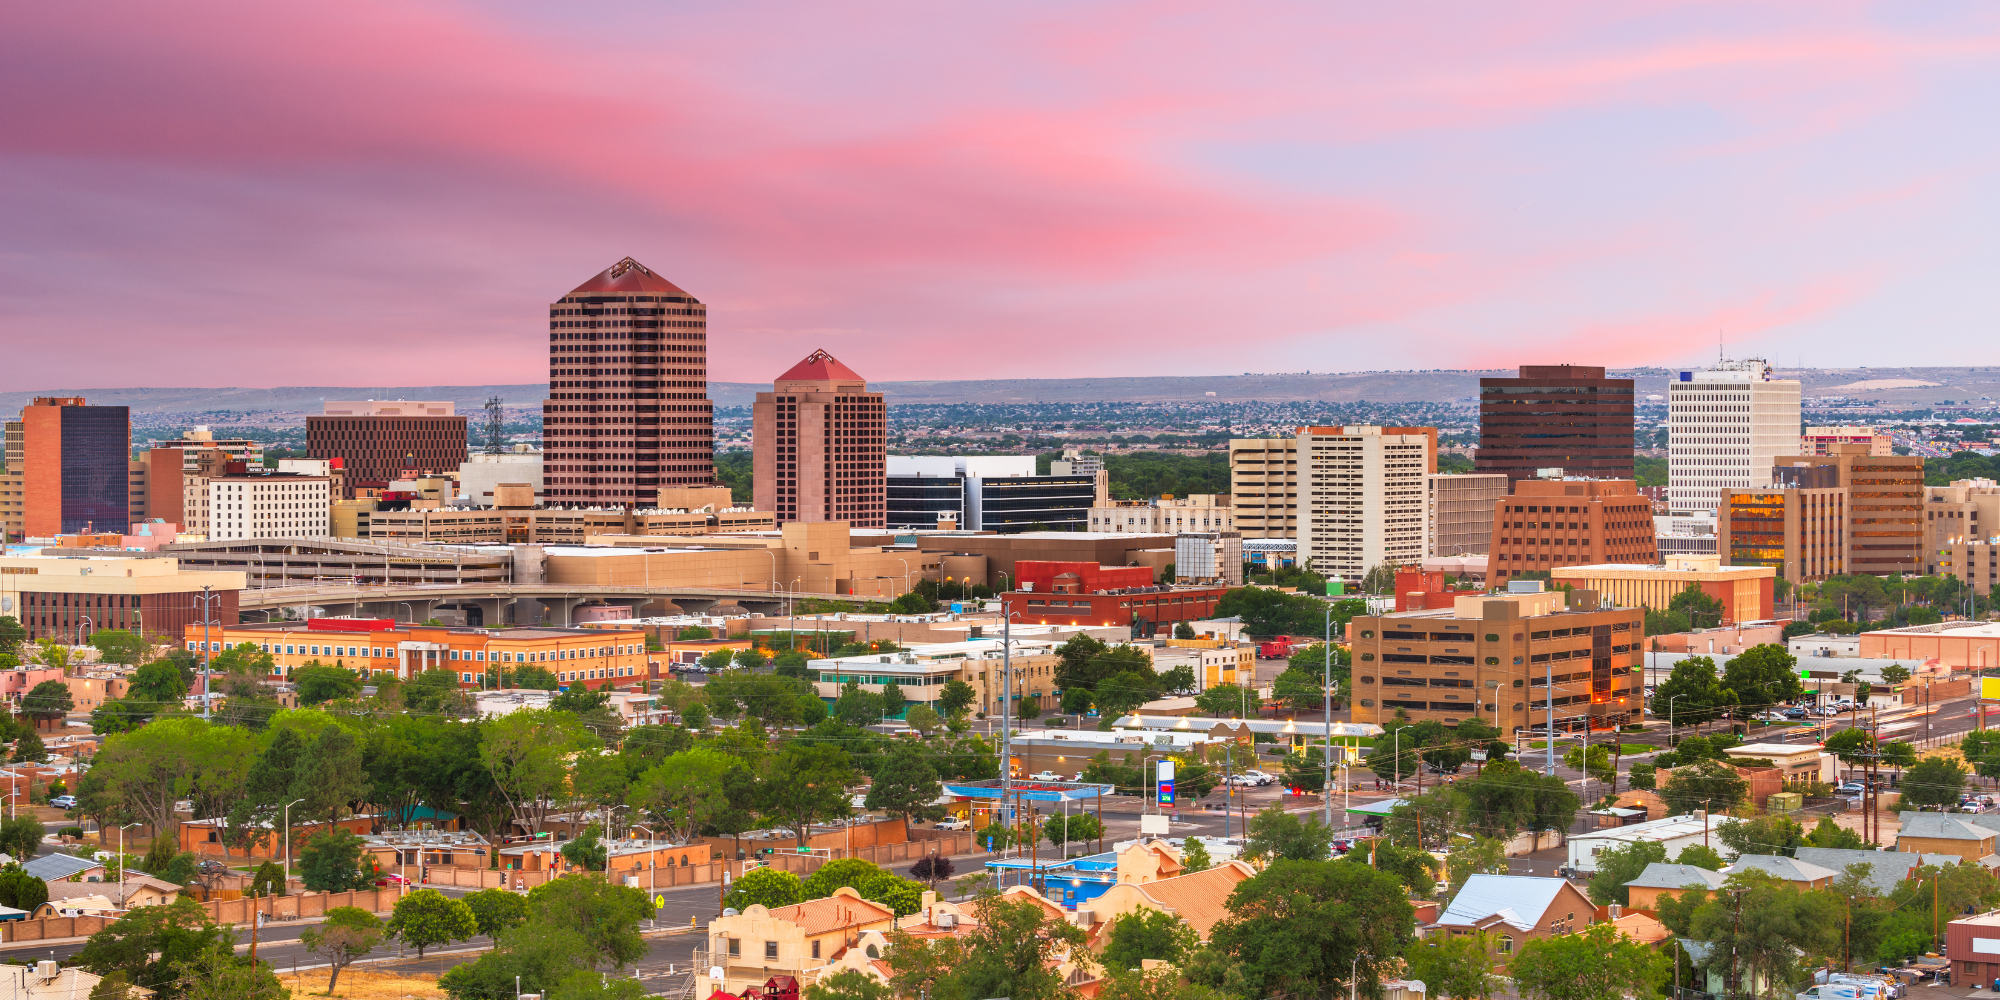 We Built This City — City of Albuquerque